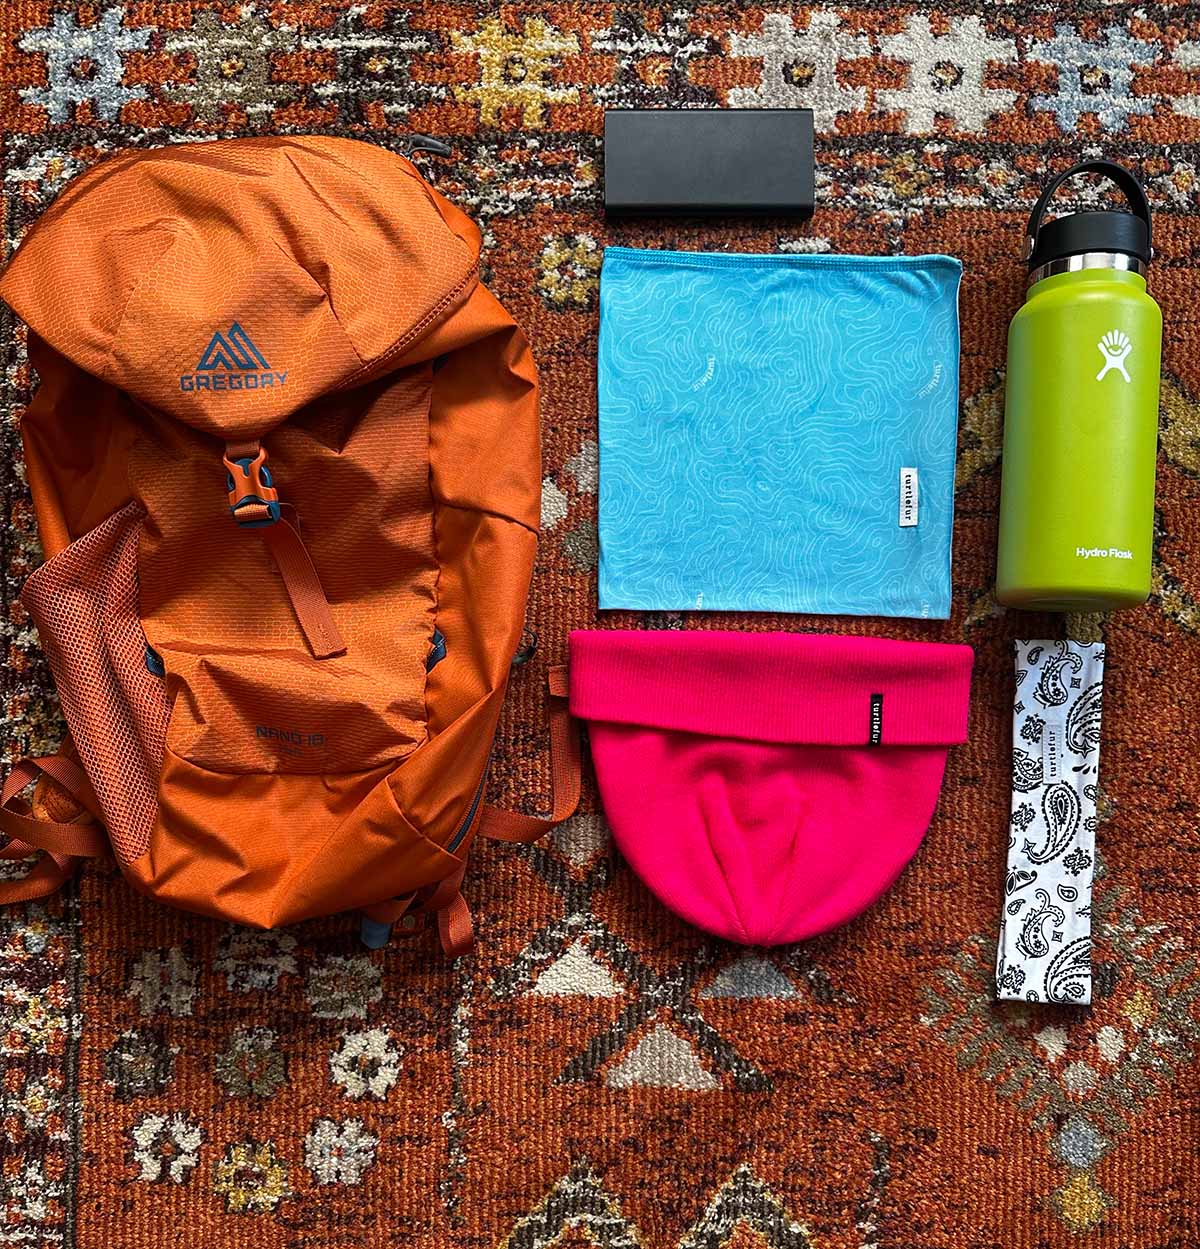 flatlay image of backpack, neck gaiter, hat, water bottle, gear